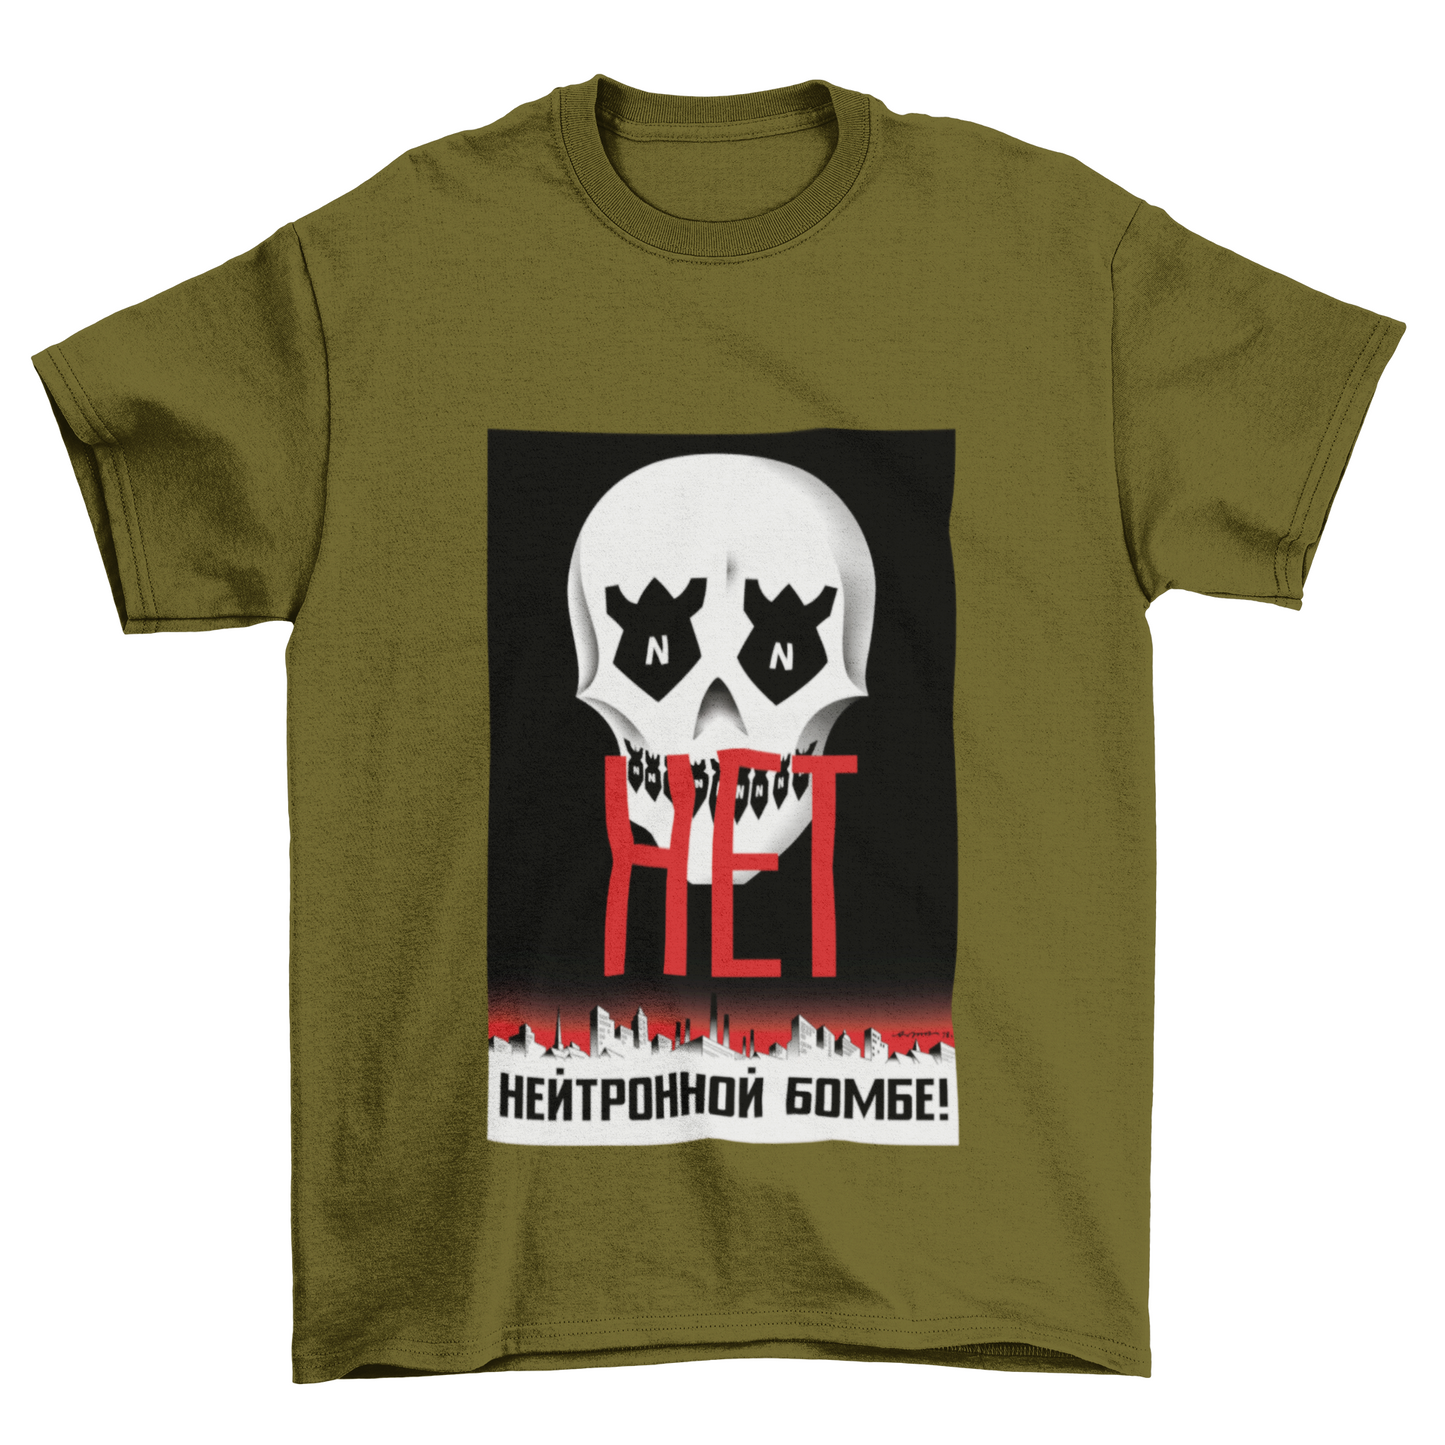 No To The Neutron Bomb! Shirt